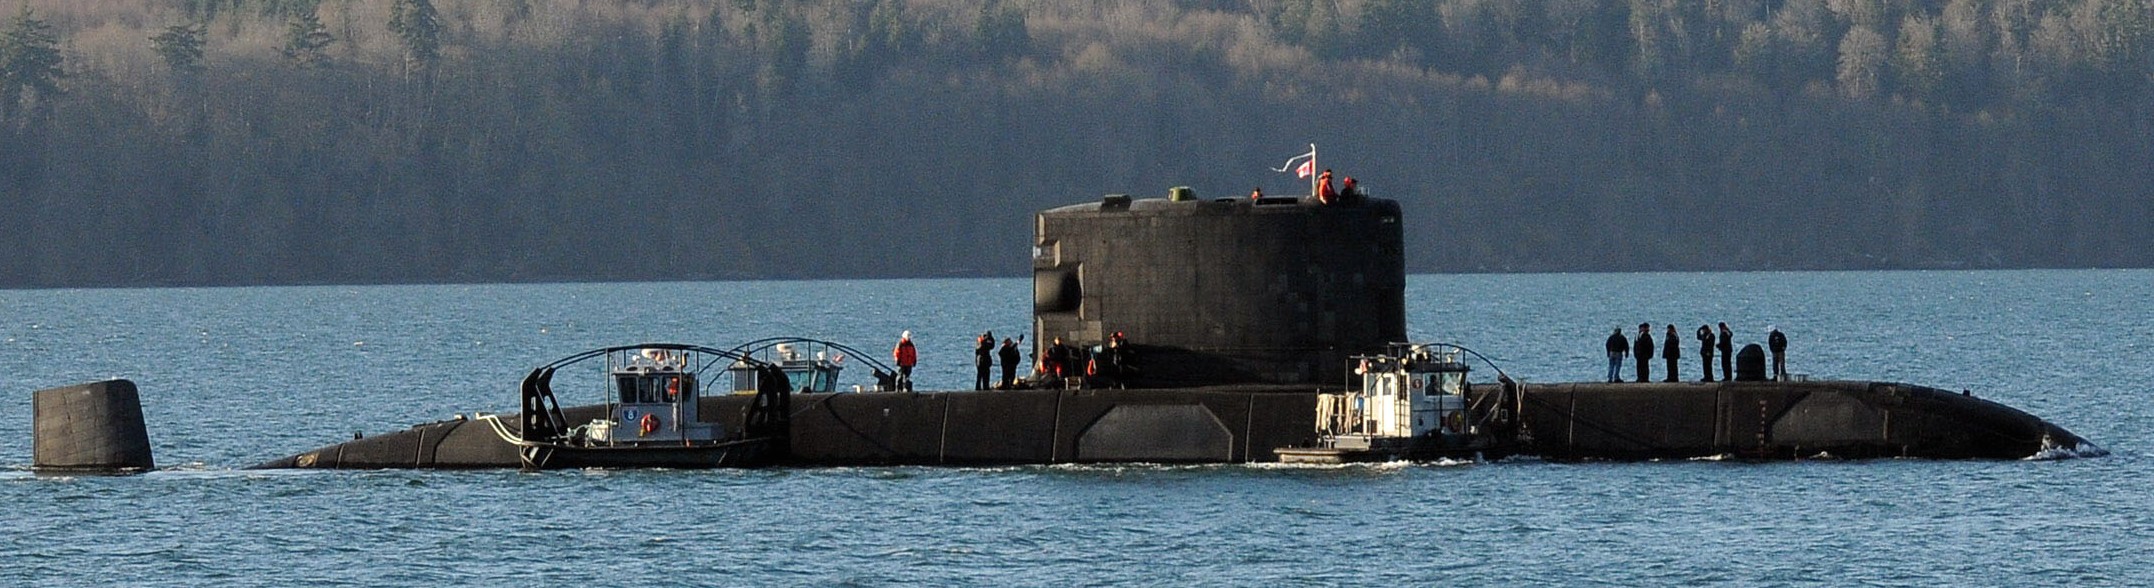 ssk-876 hmcs victoria upholder class attack submarine hunter killer ncsm royal canadian navy 07